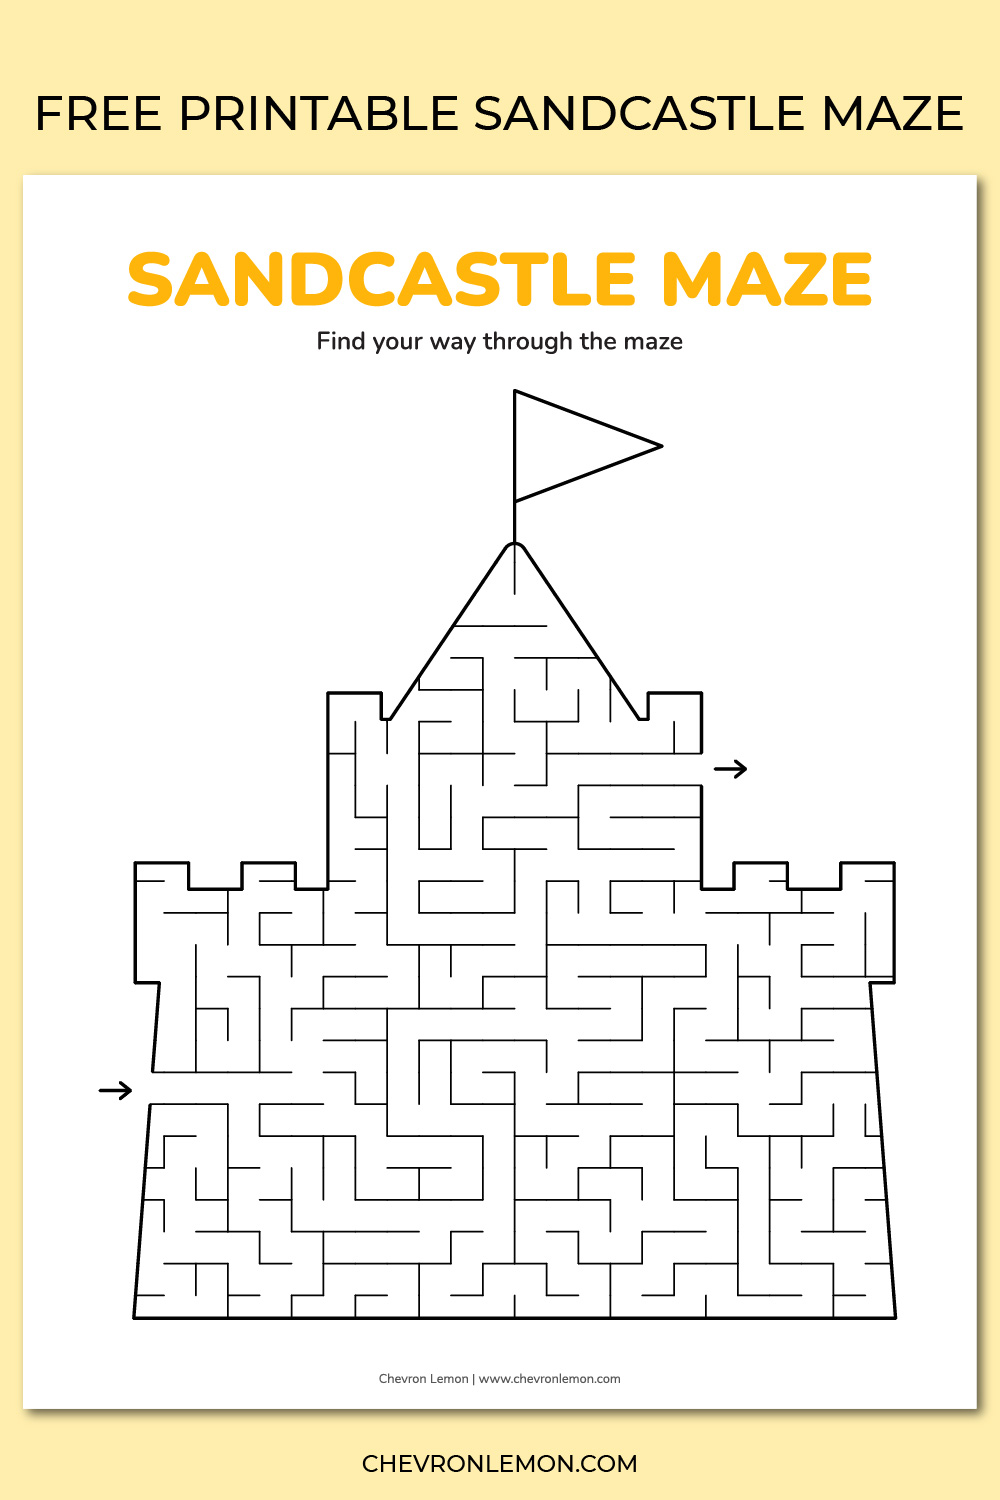 Sandcastle maze